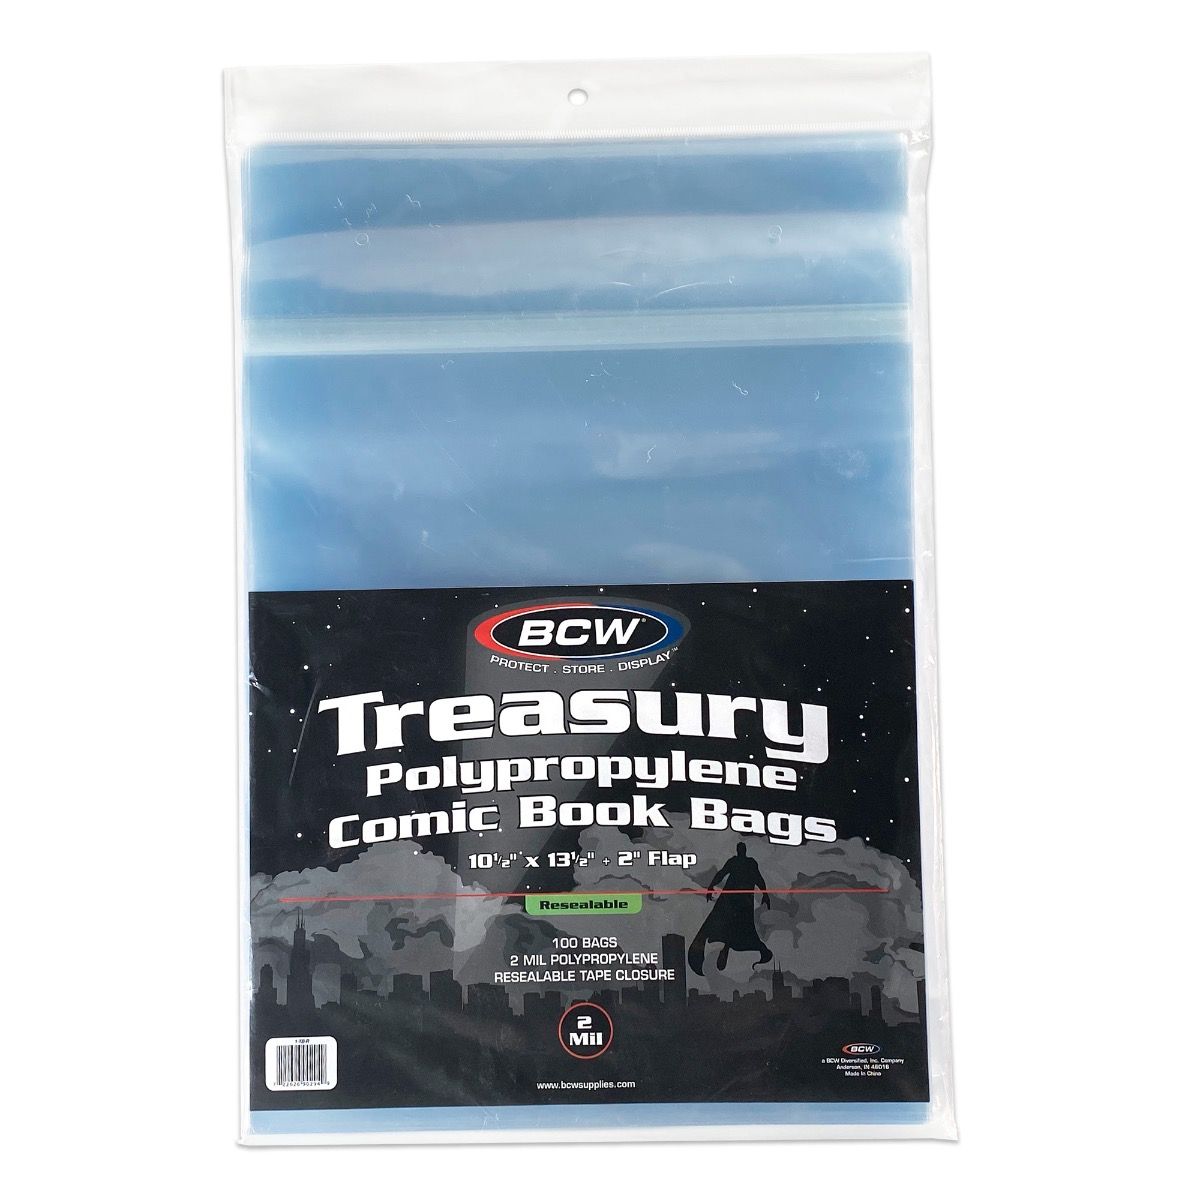 Resealable Treasury Bags